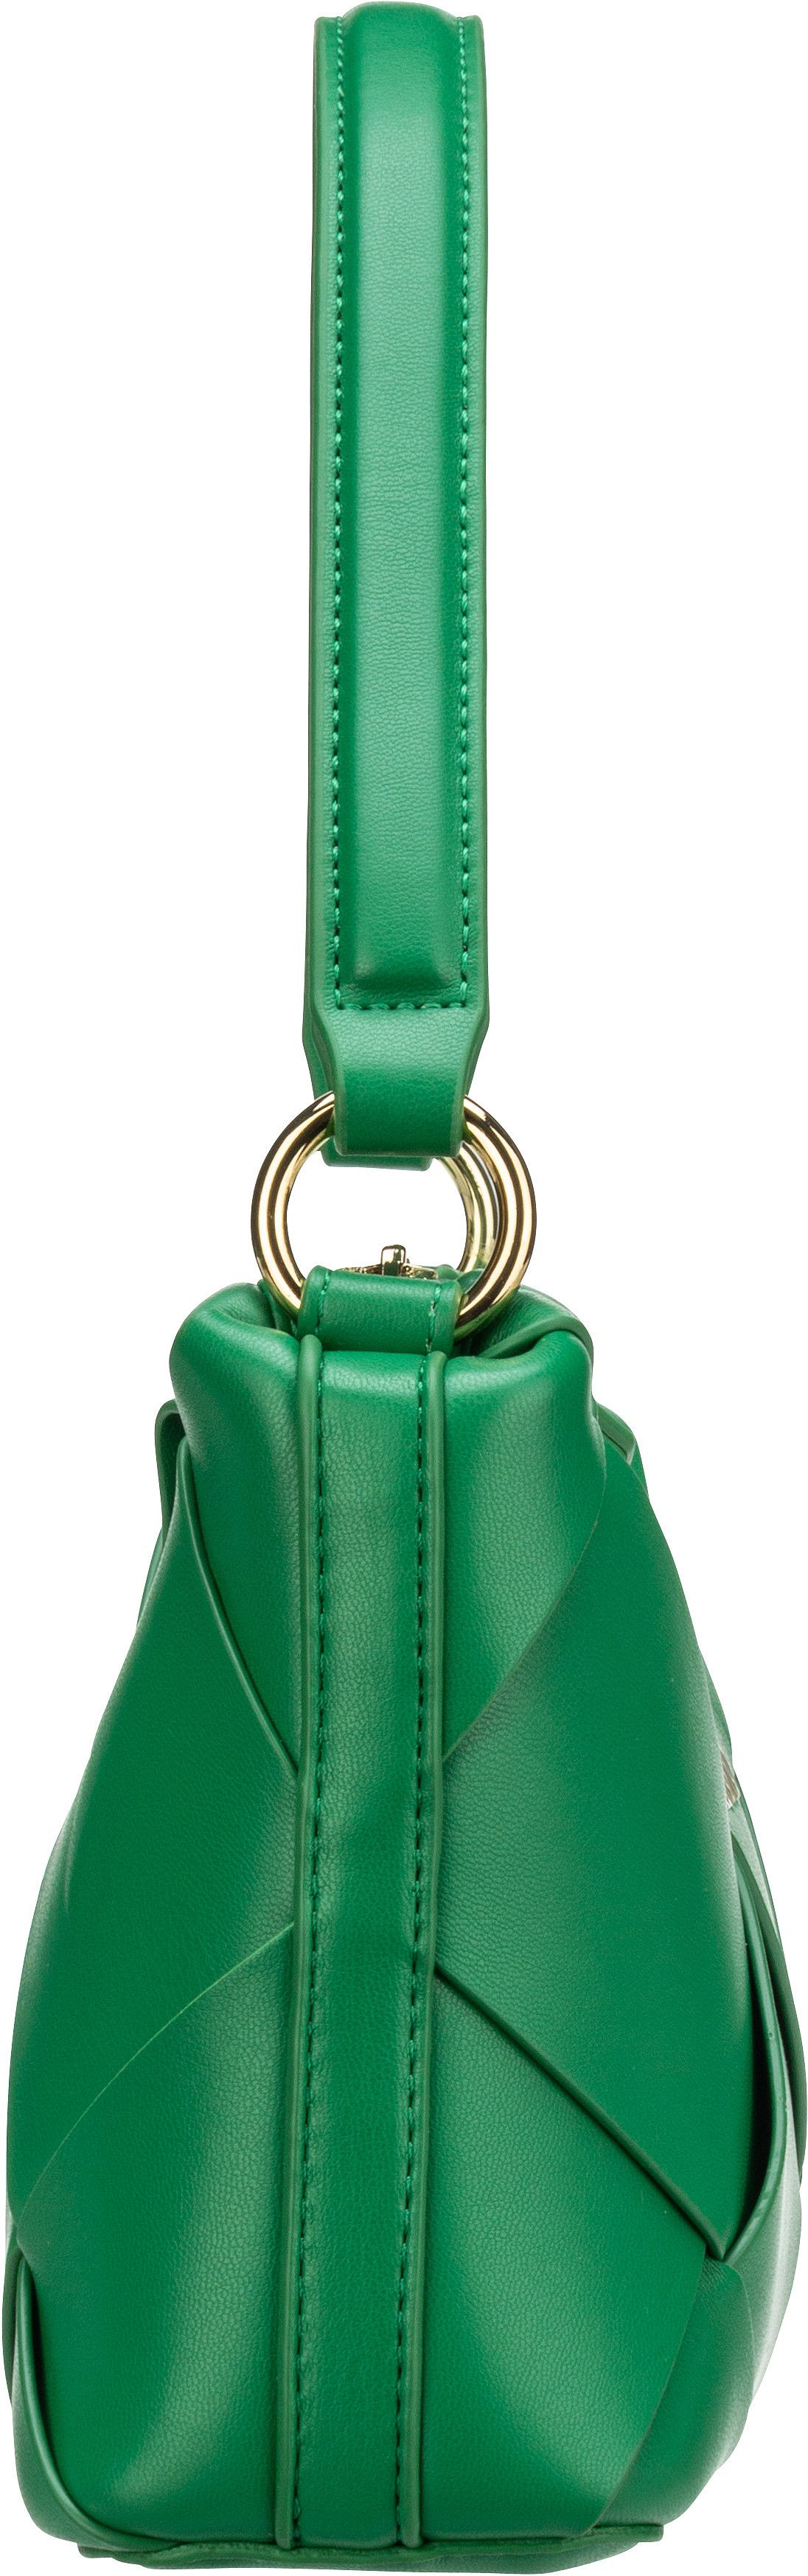 Valentino Ibiza Shoulder Bag 503 - Verde